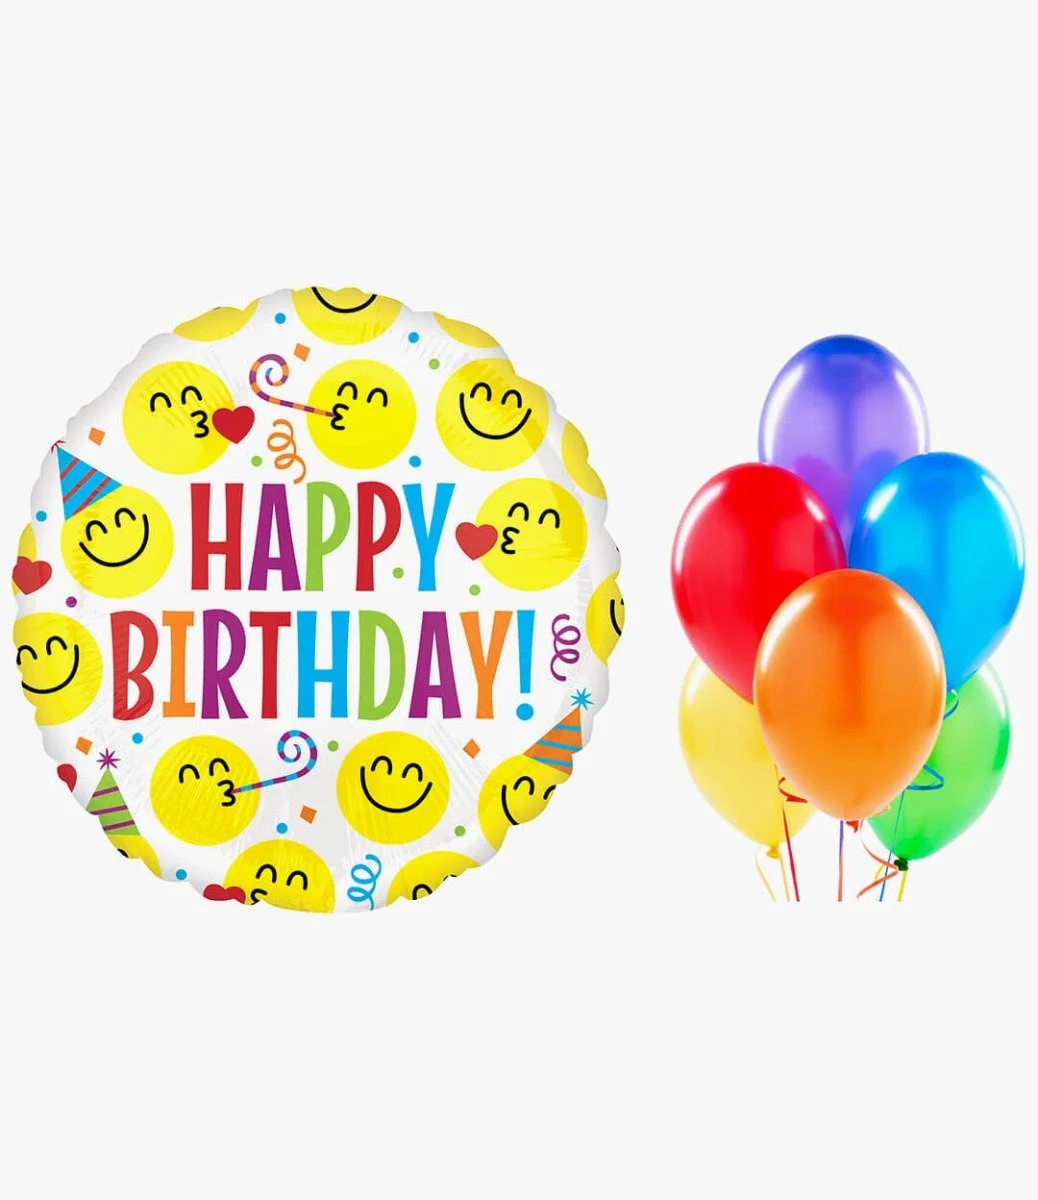 Happy Birthday Emoji Balloon and 6 Colorful Balloons